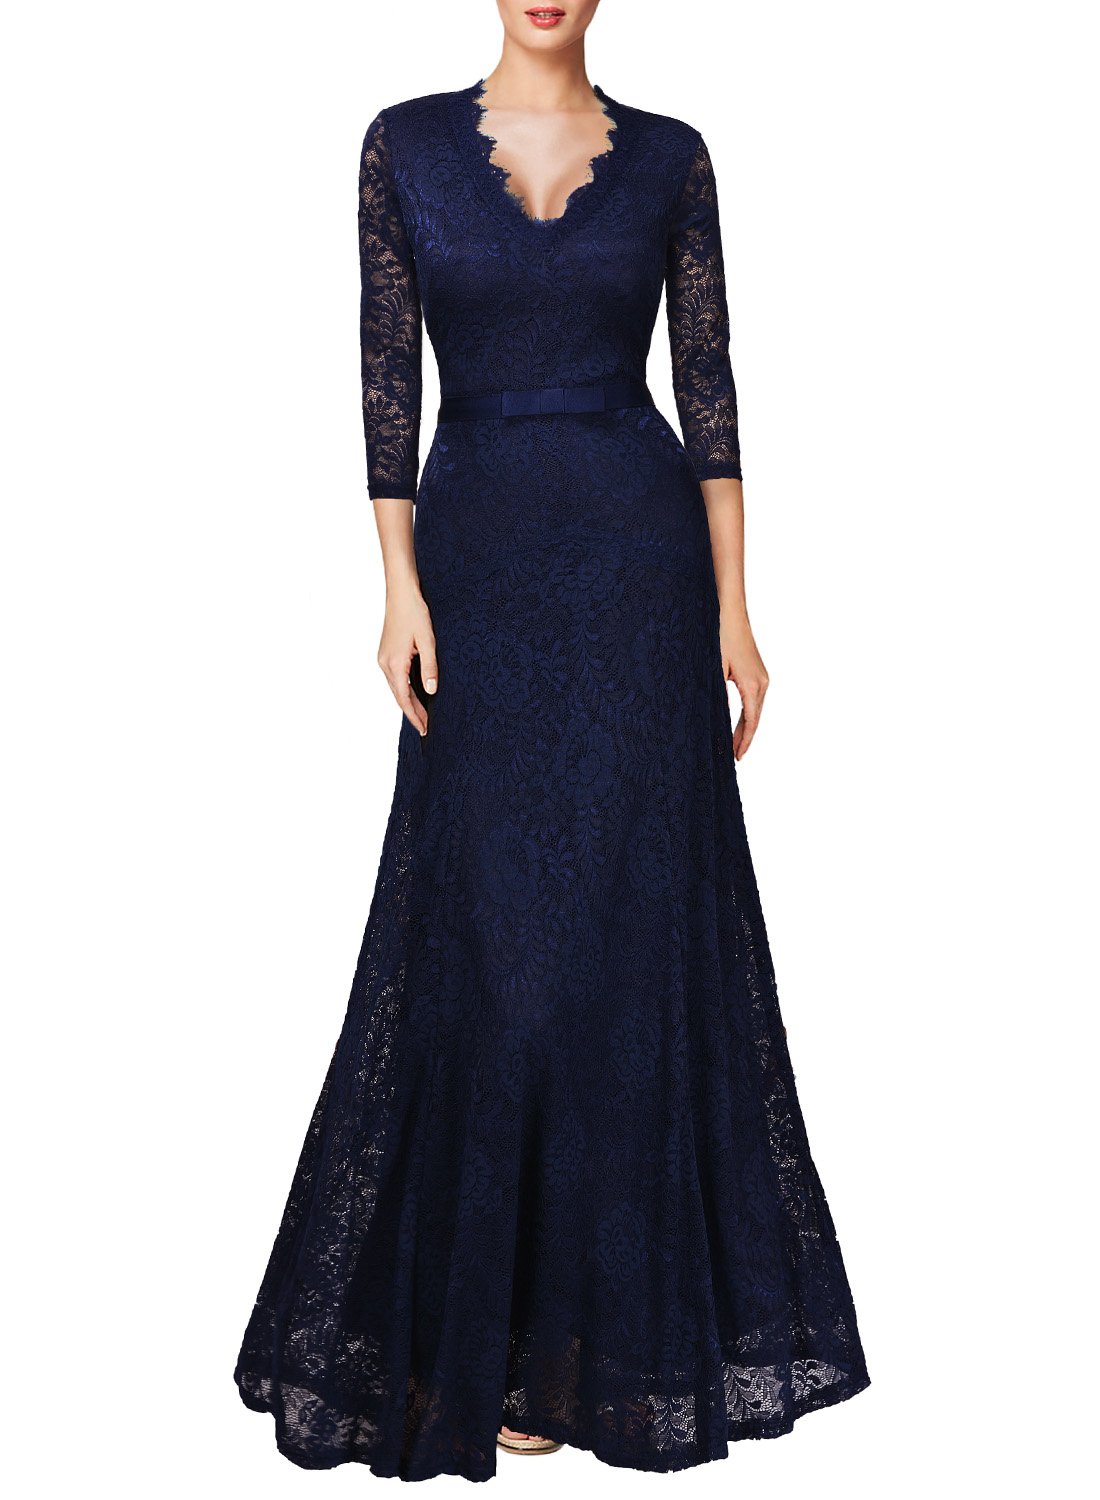 Long Navy Blue Bridesmaid Dresses: Amazon.com